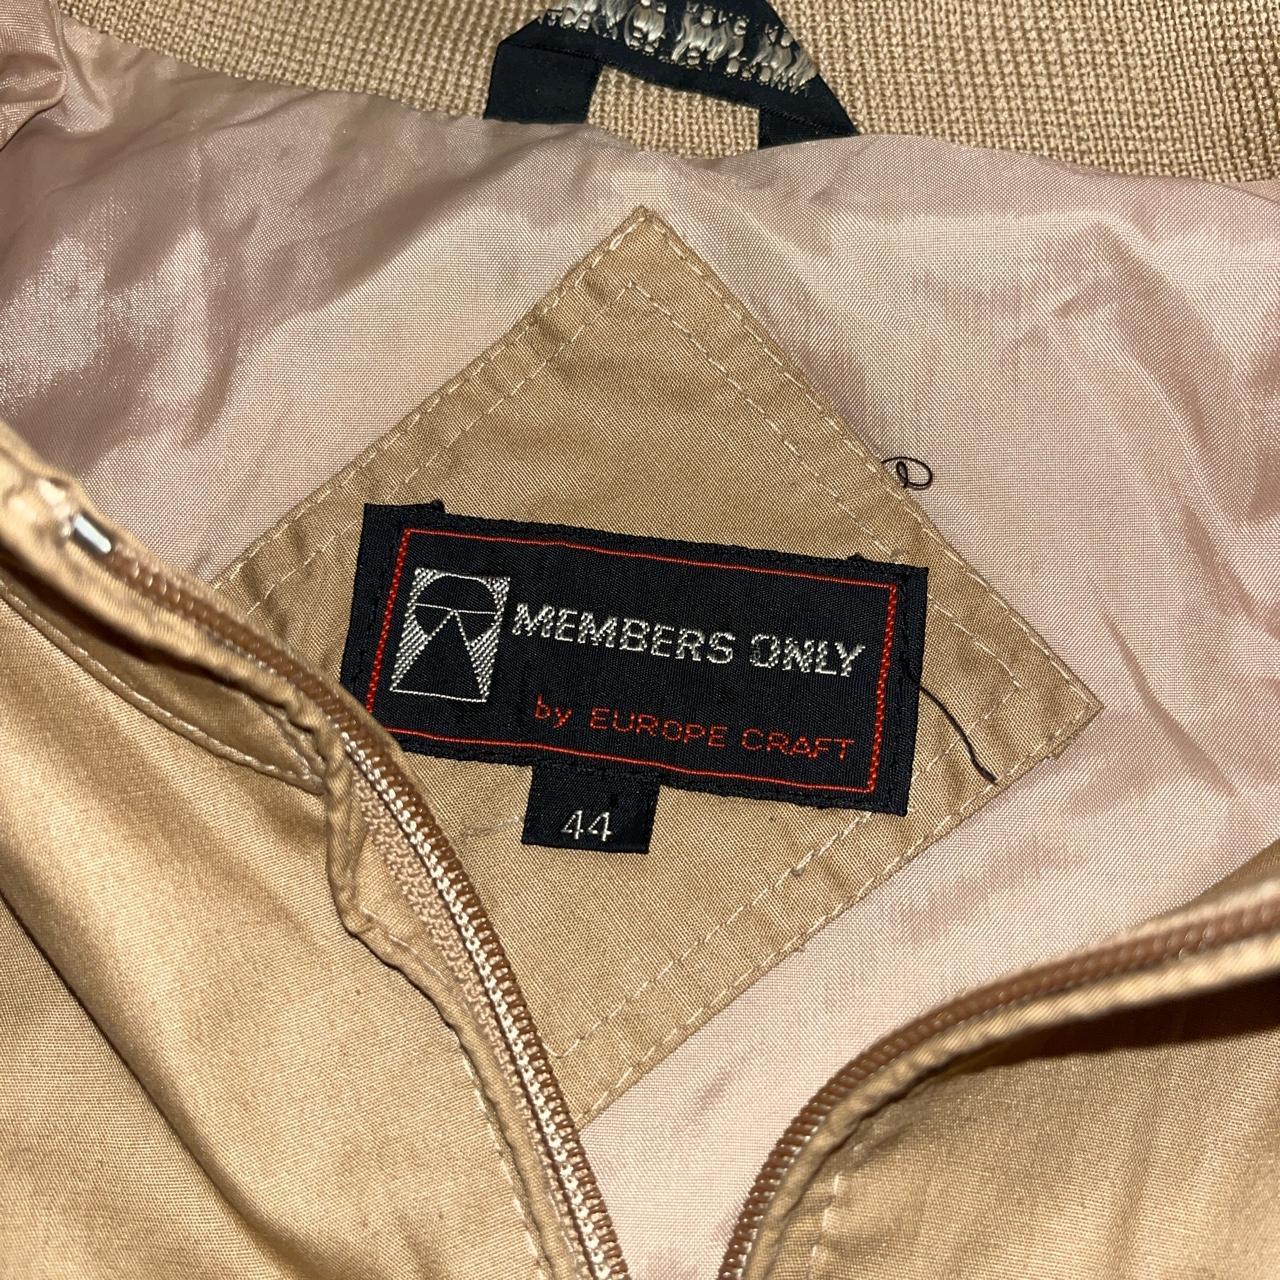 Members Only Men's Jacket | Depop